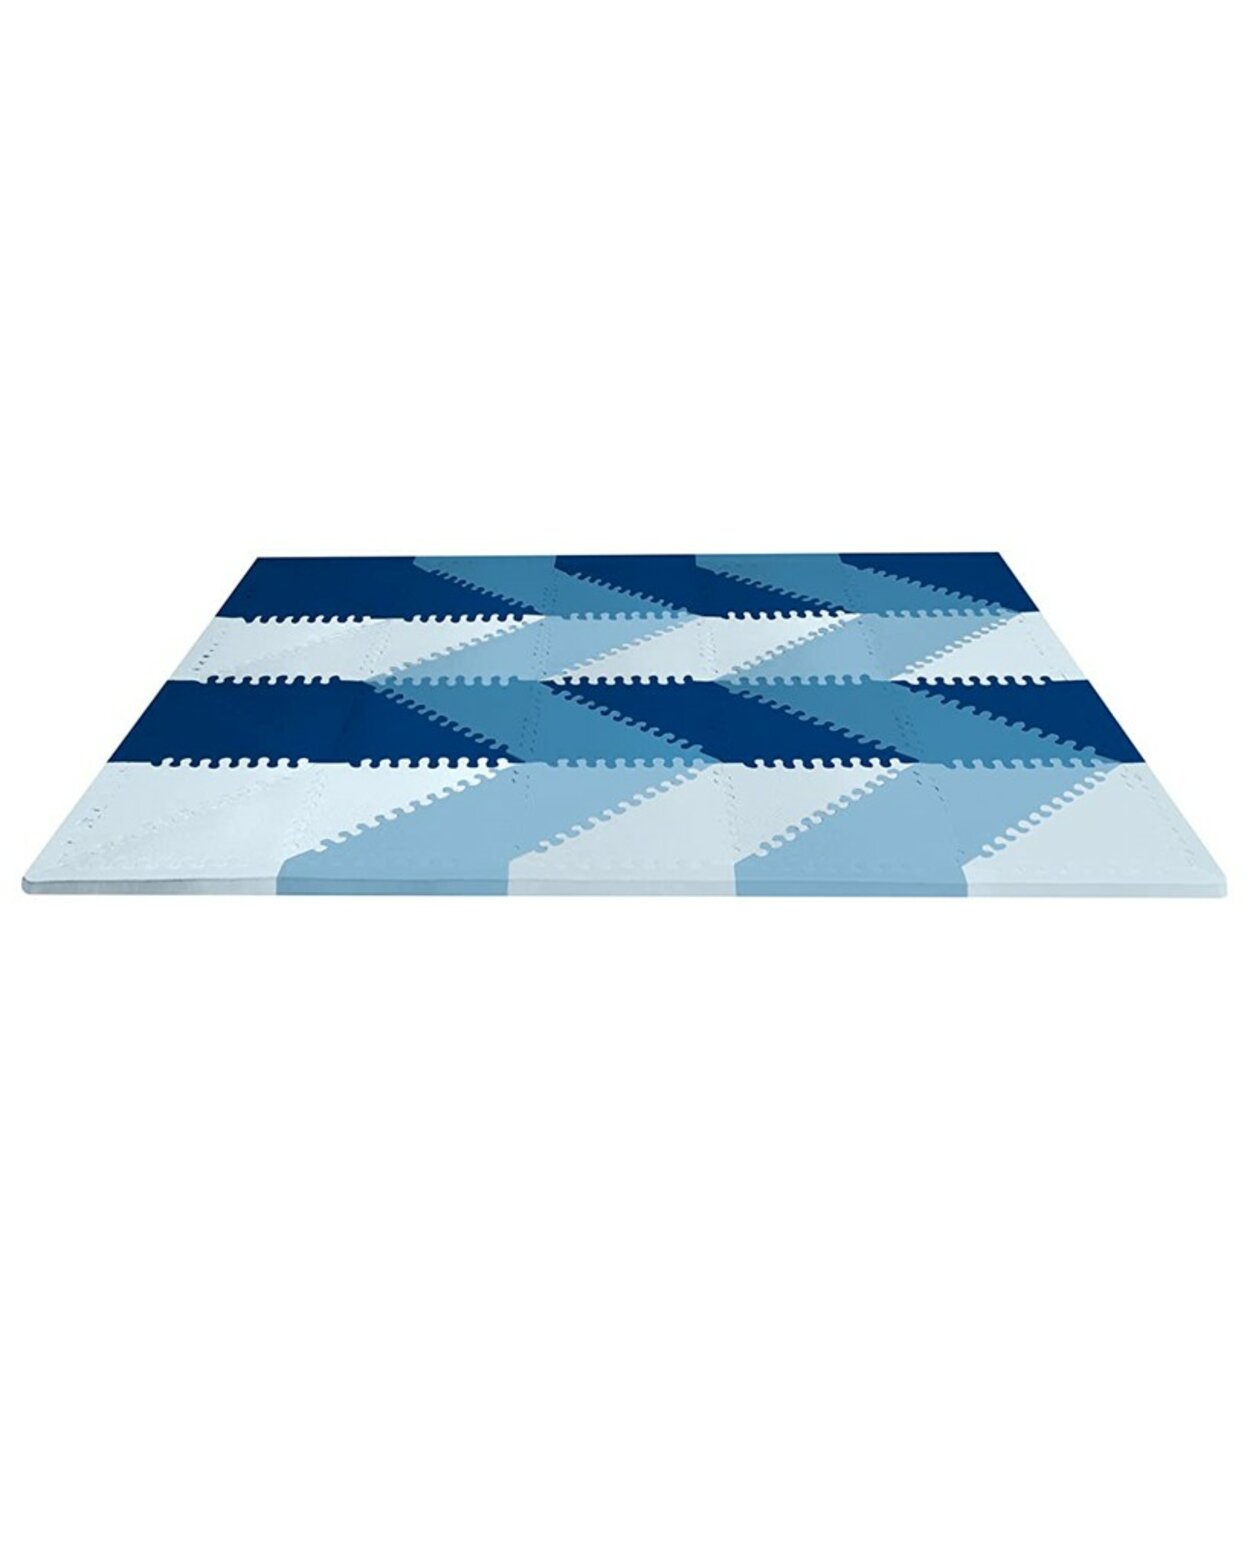 SKIP HOP Puzzle penové modré 72 ks, 10m+ | Predeti.sk